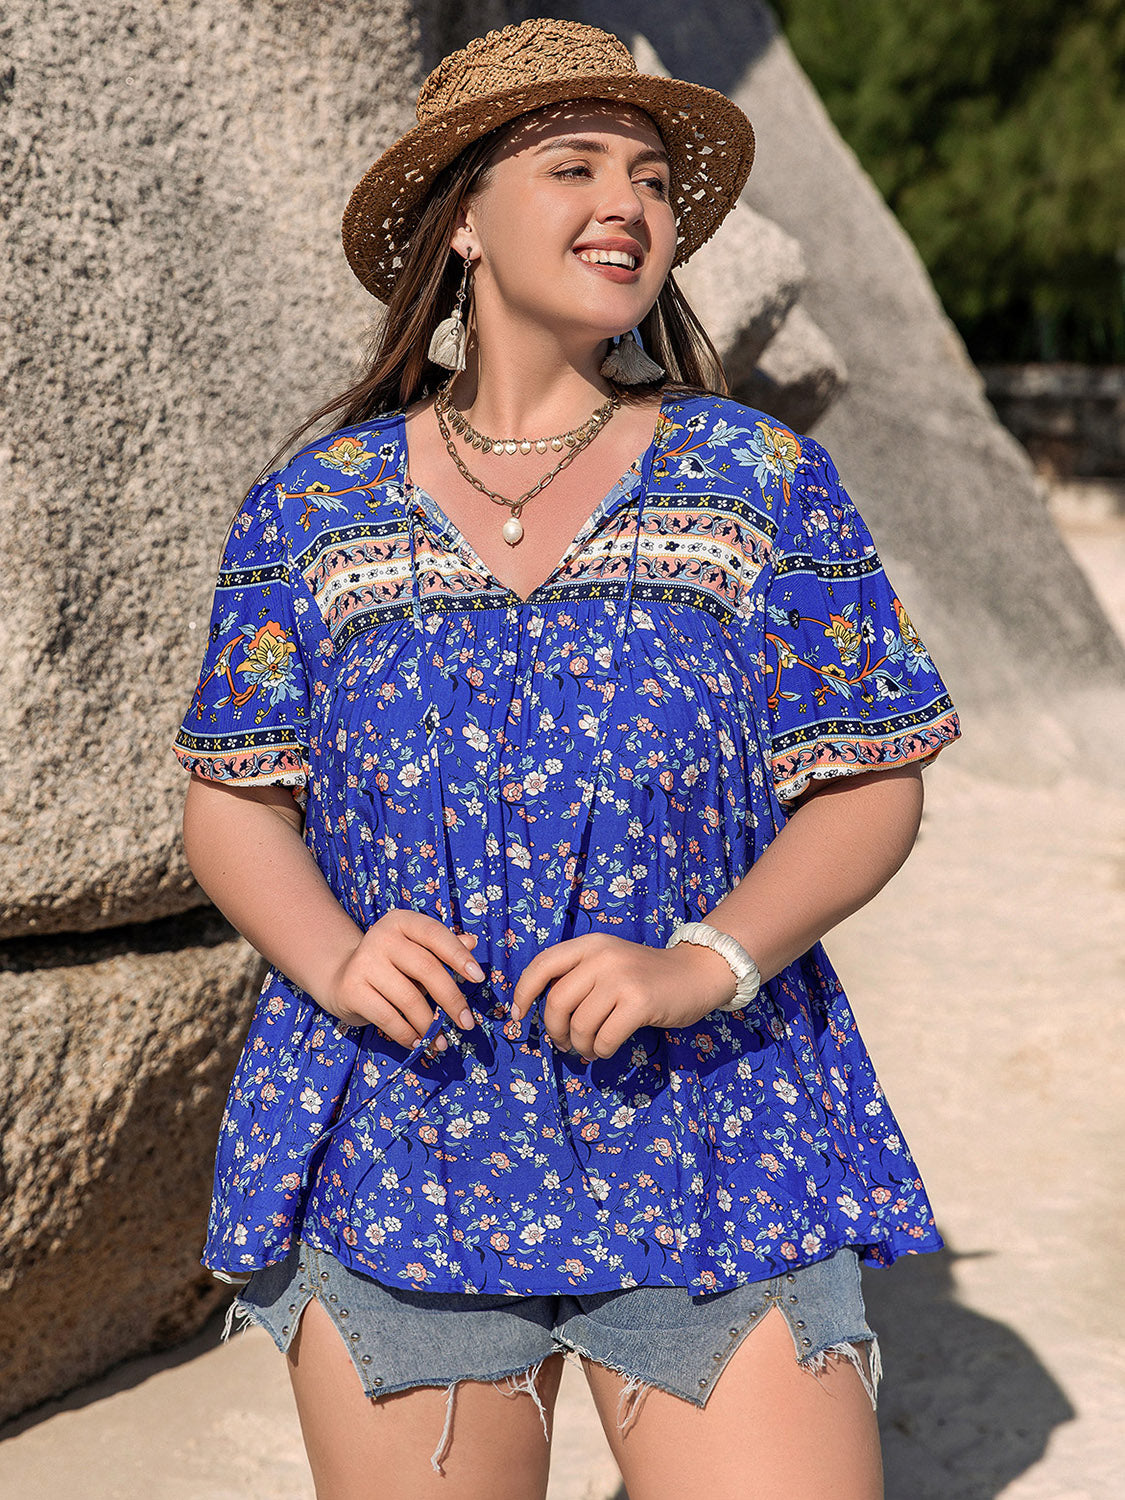 Plus-size boho blouse with vibrant blue floral pattern